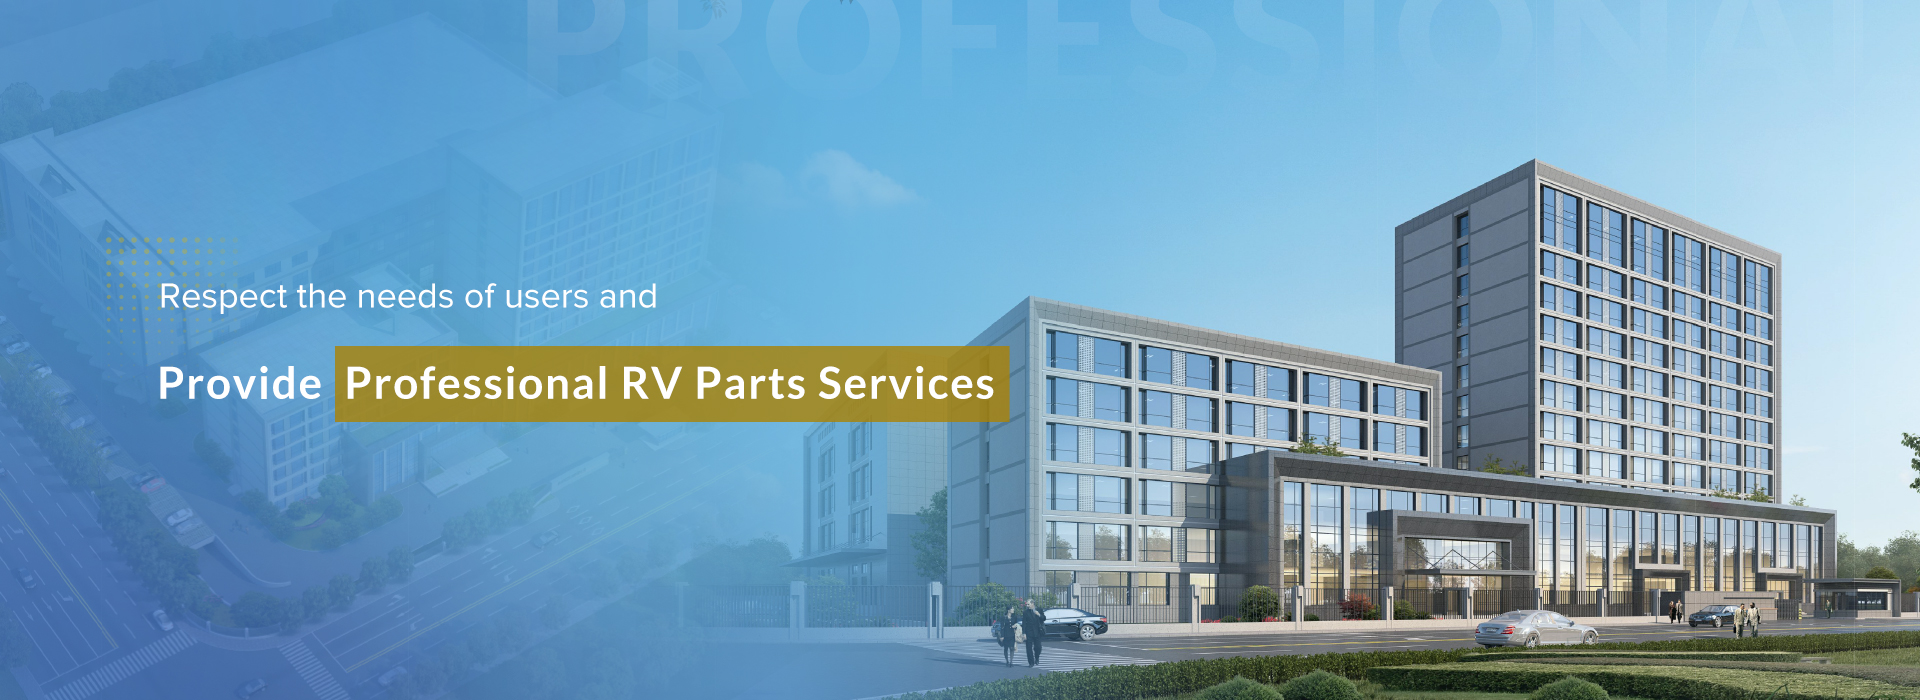 Provide Professional RV Parts Services